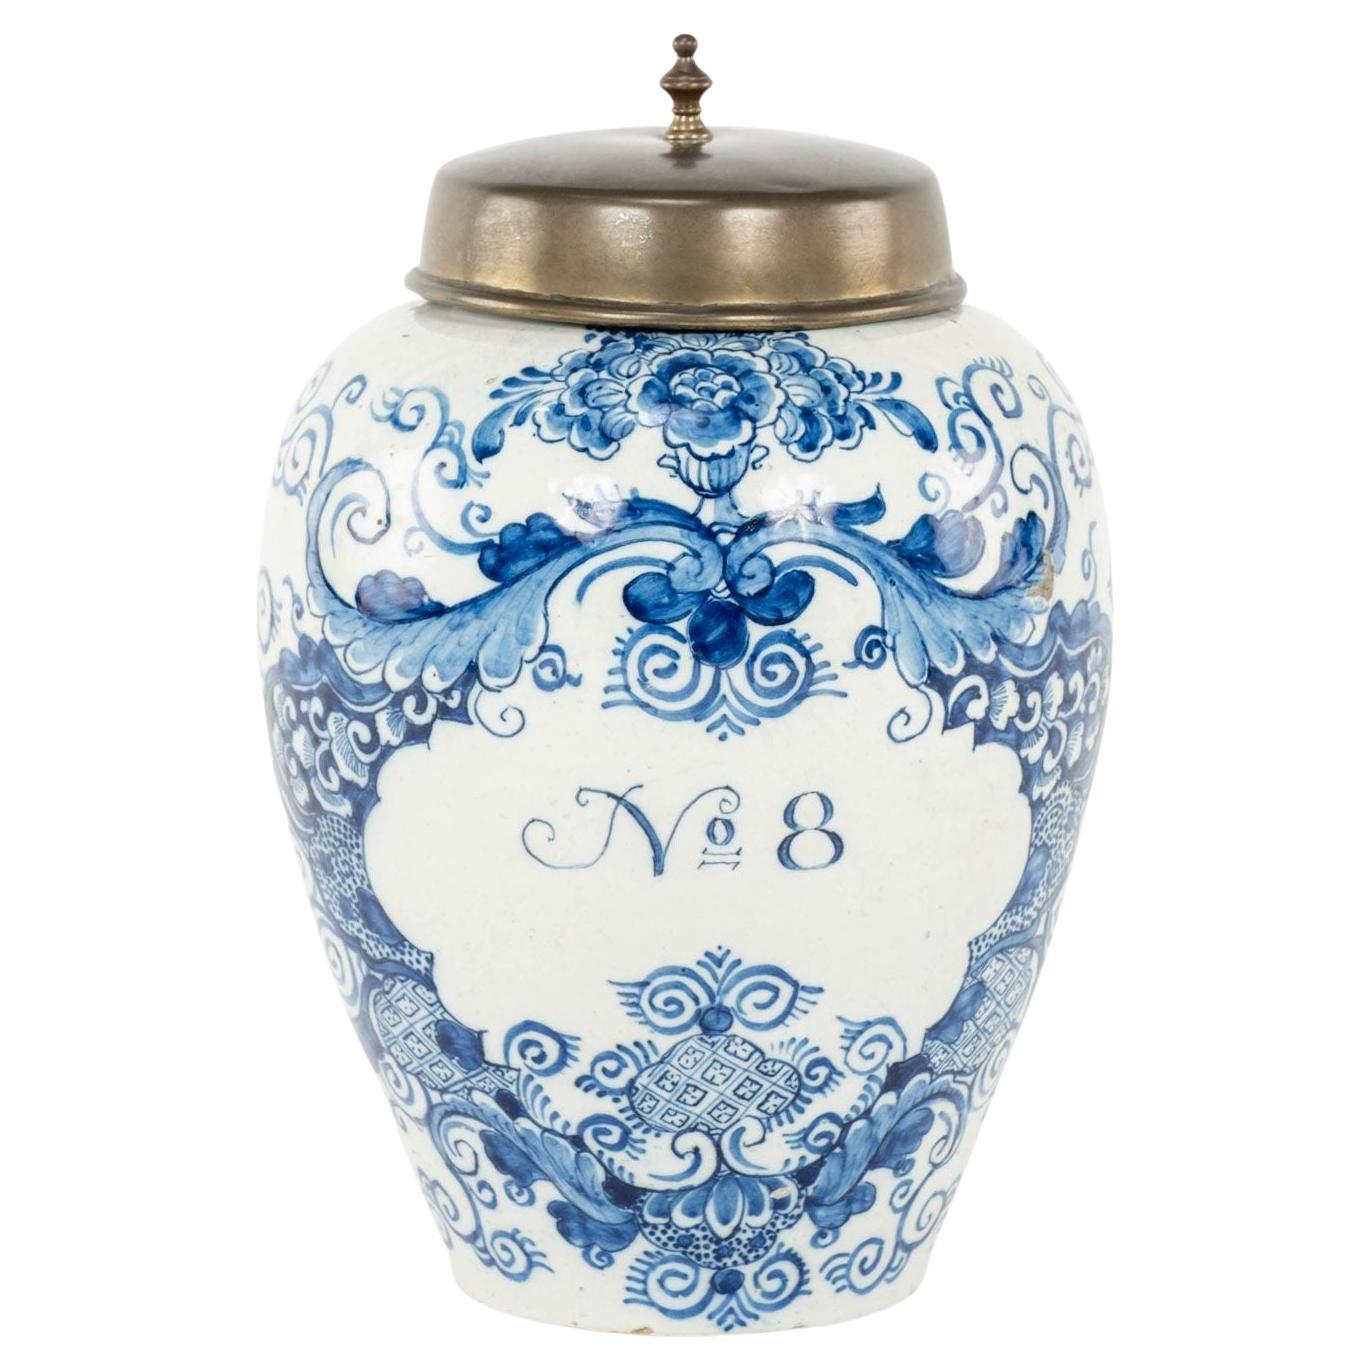 Delft Blue and White "No 8" Tobacco Jar For Sale